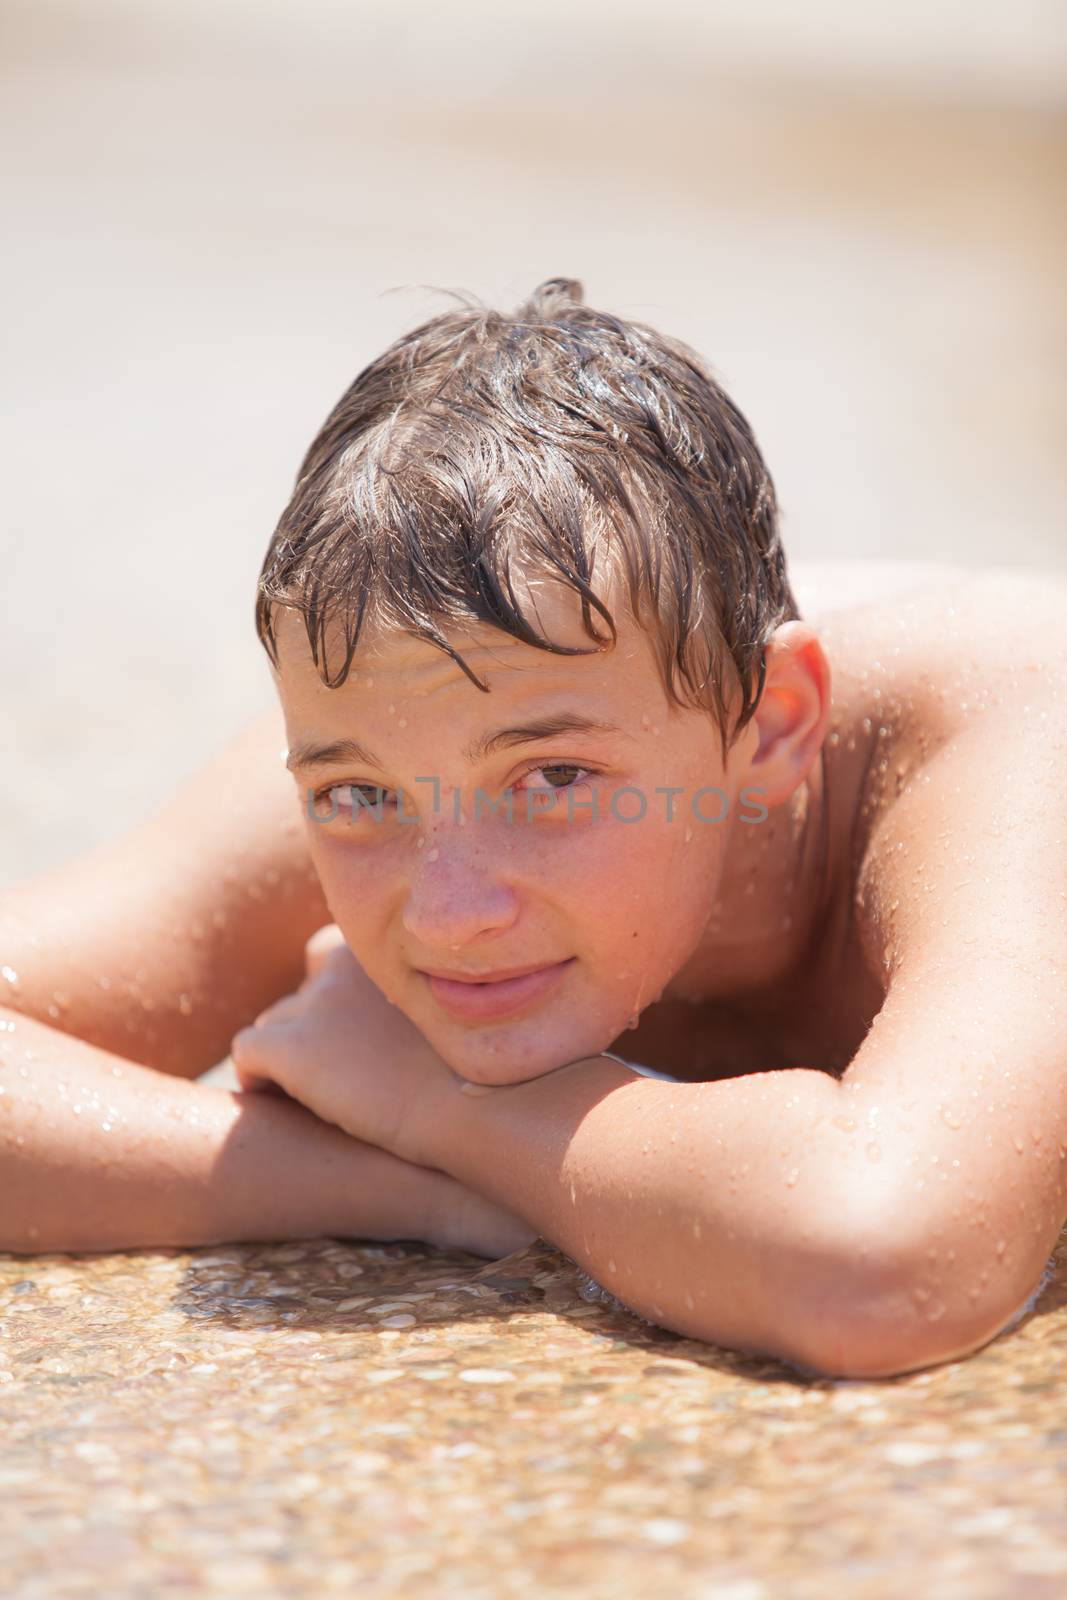 pretty boy tans by MegaArt